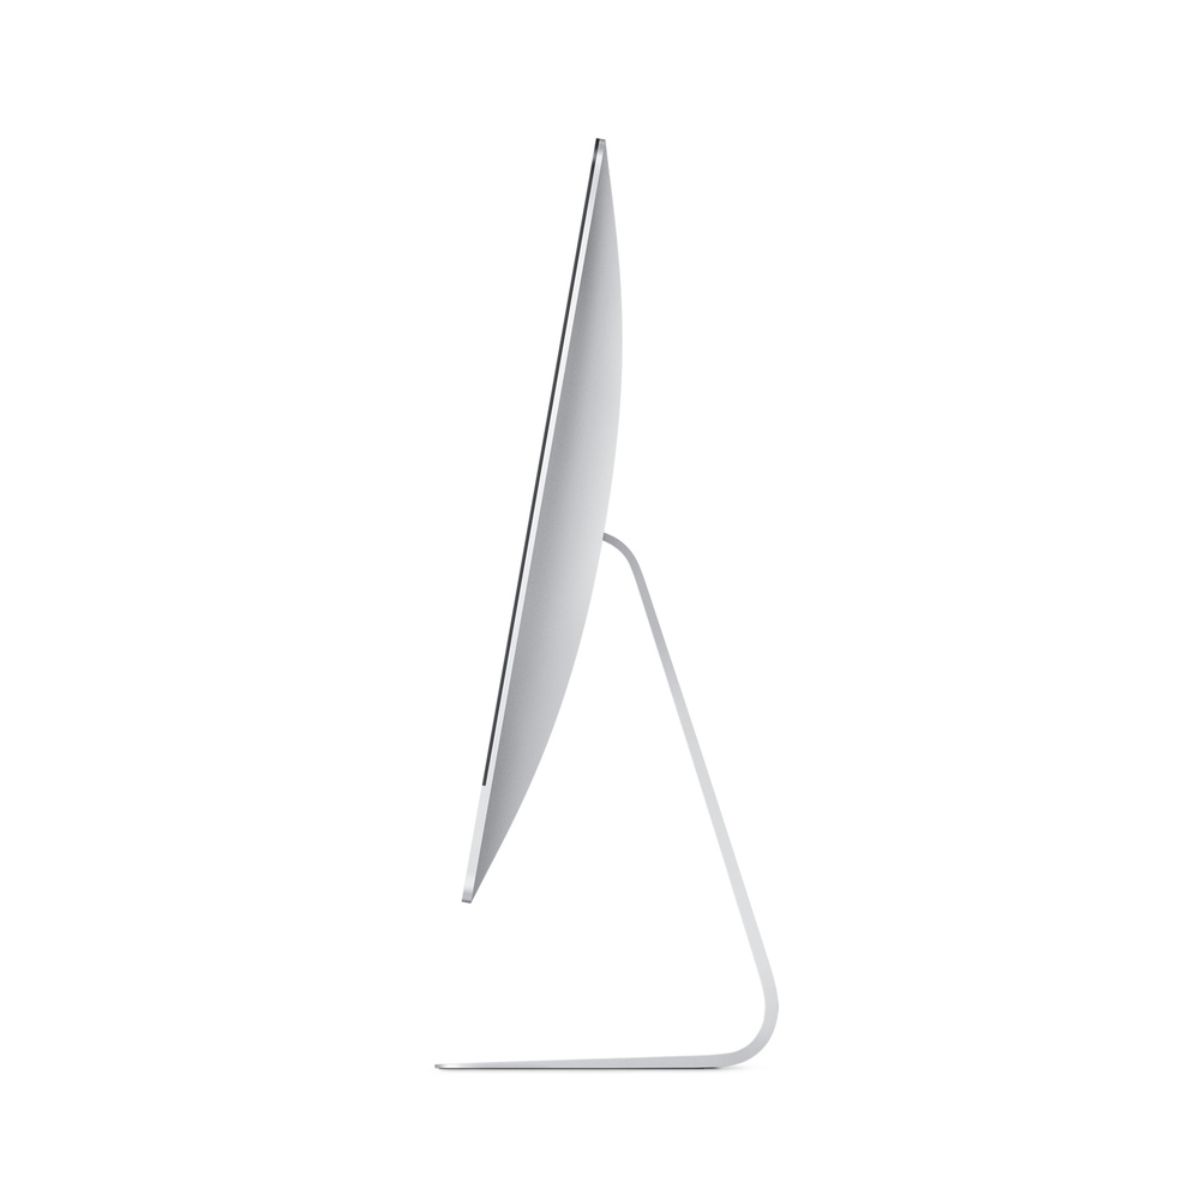 Apple iMac A2116 AiO - All-in-One PC - Intel Core i7 8700 @ 3,2 GHz - 16 GB - 500 GB SSD - iOS - Sehr gut